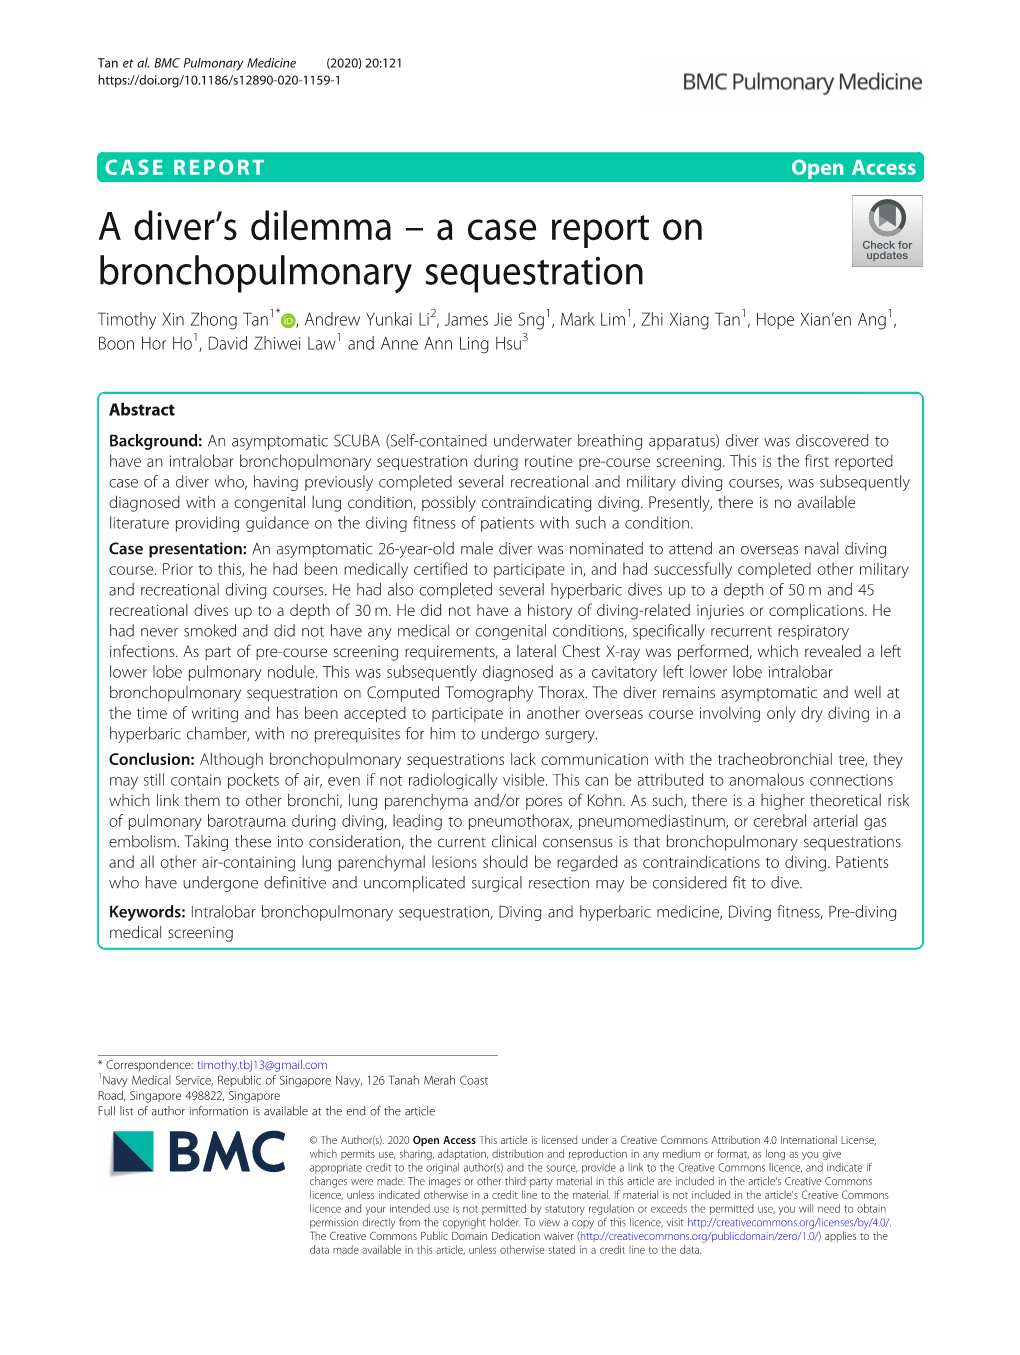 A Diver's Dilemma – a Case Report on Bronchopulmonary Sequestration